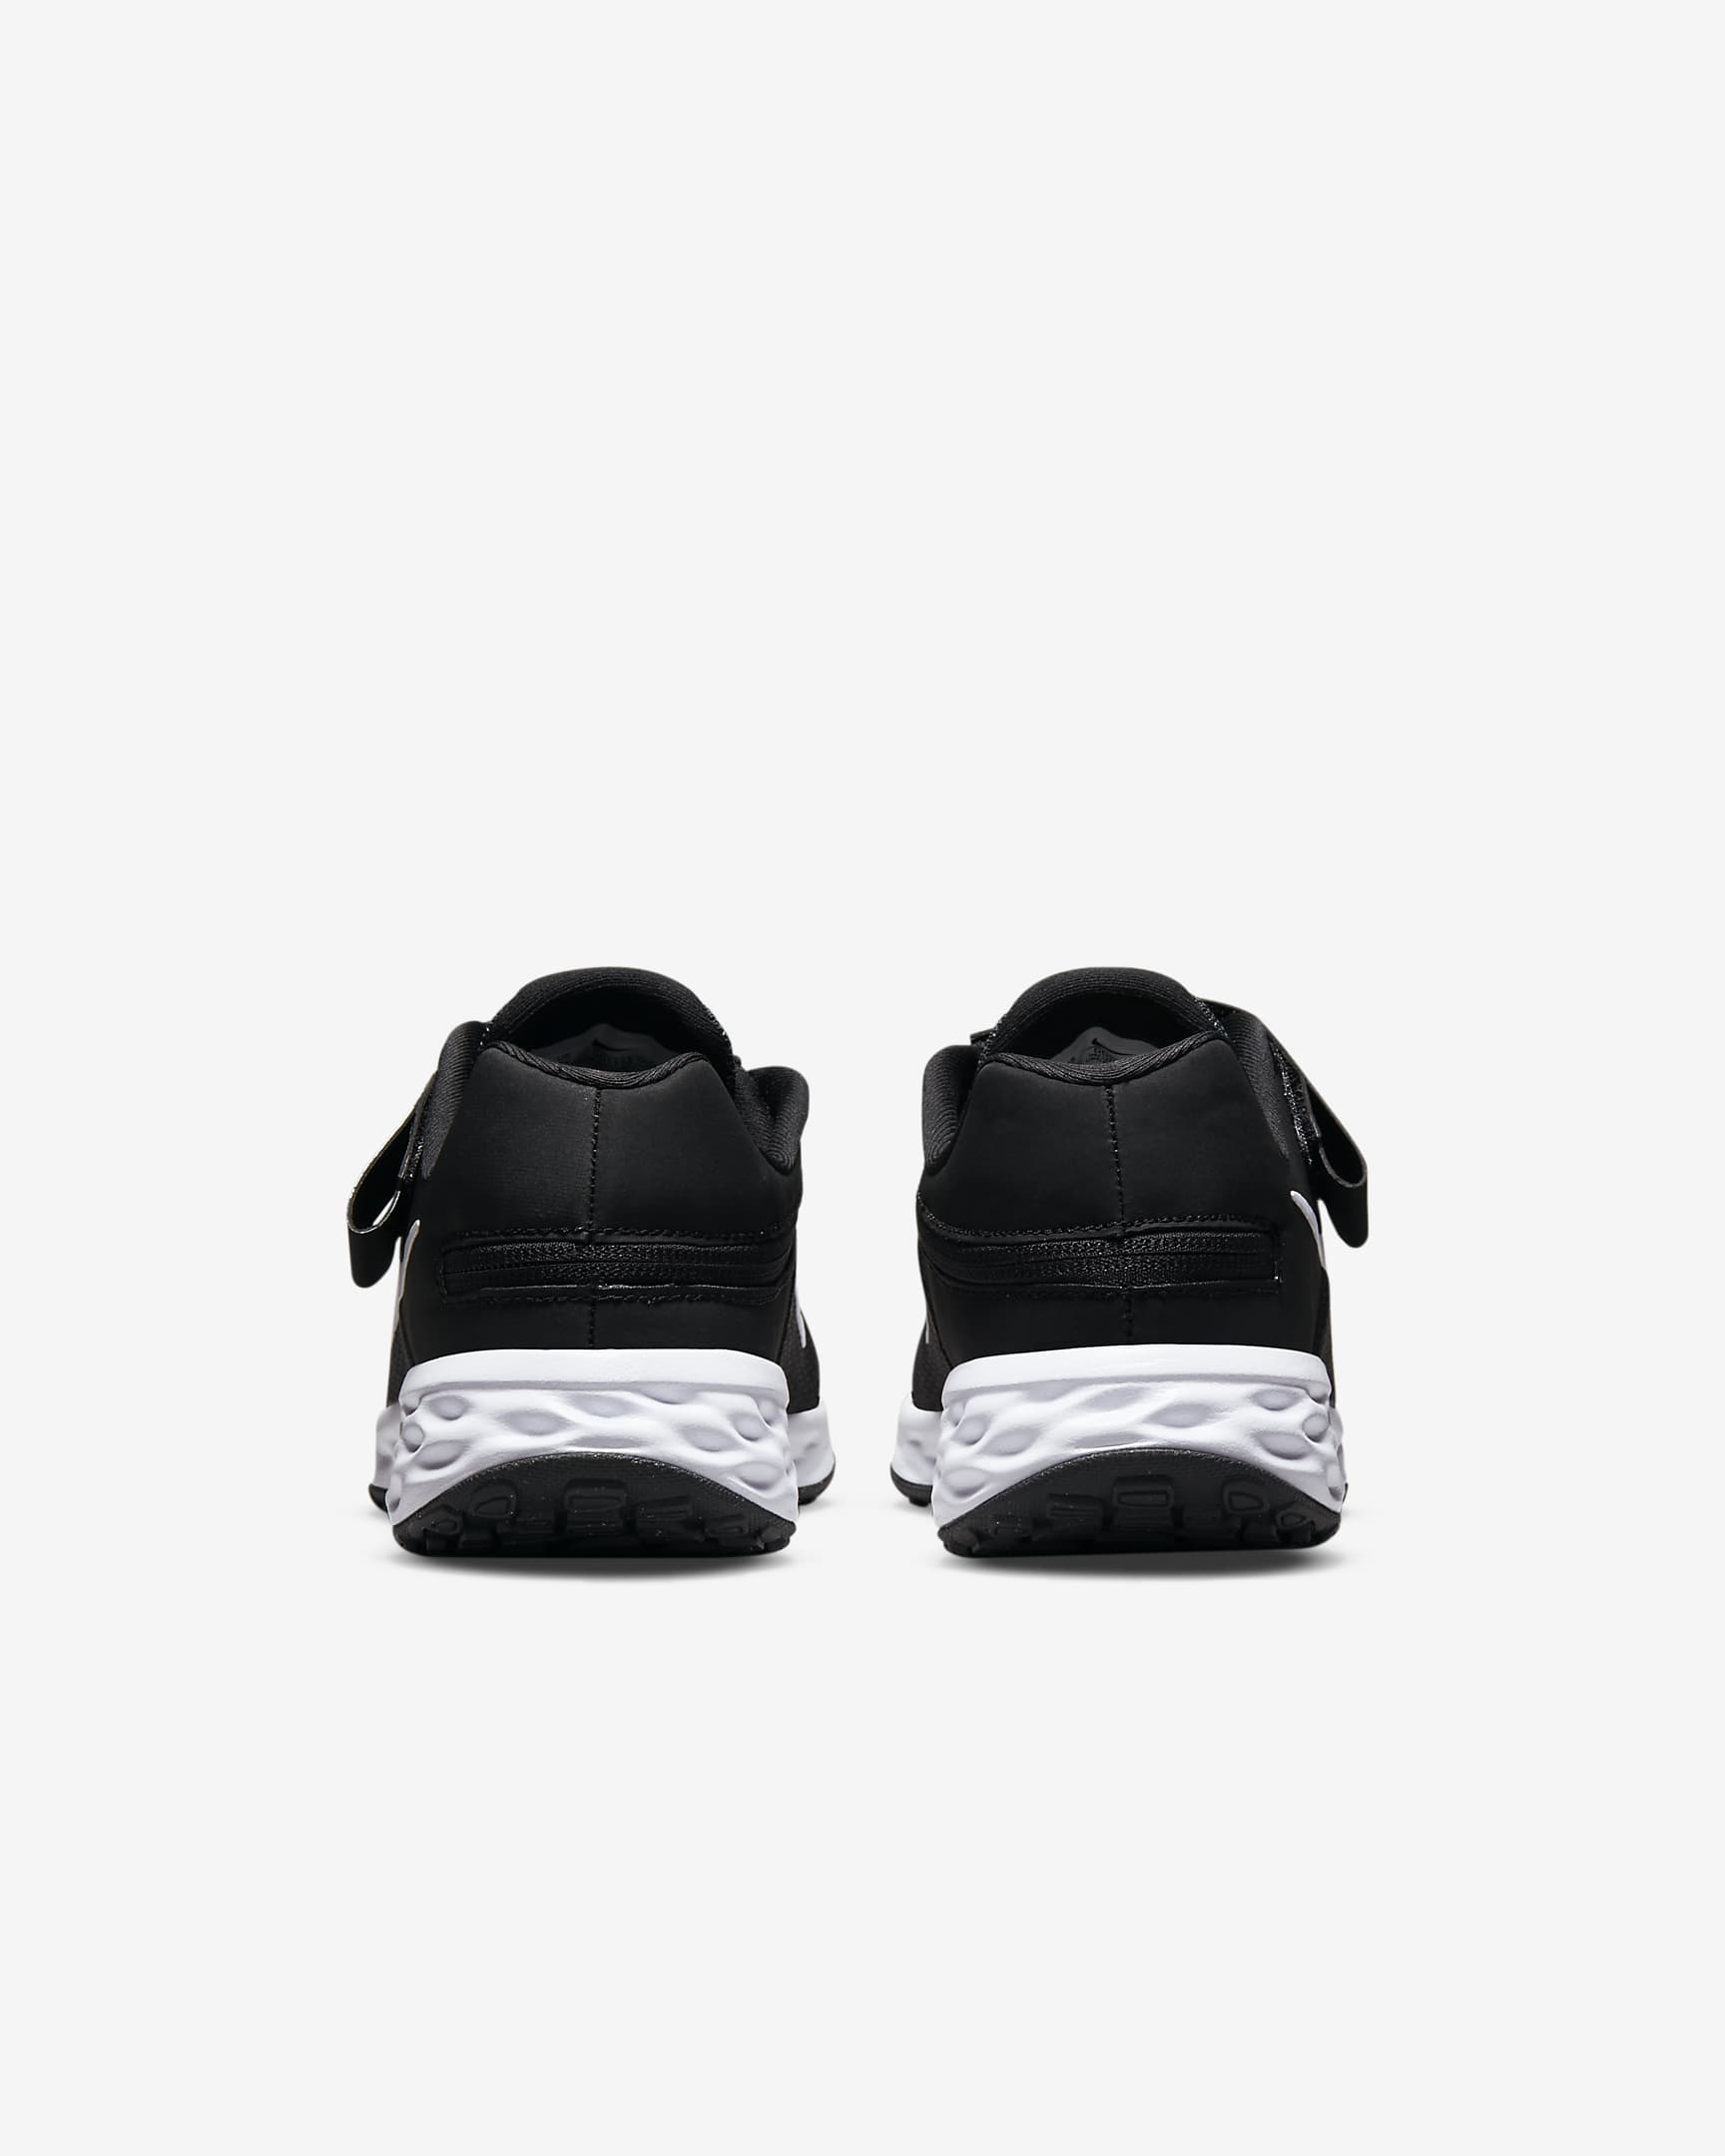 Chaussure de running sur route facile à enfiler Nike Revolution 6 FlyEase pour ado - Noir/Dark Smoke Grey/Blanc